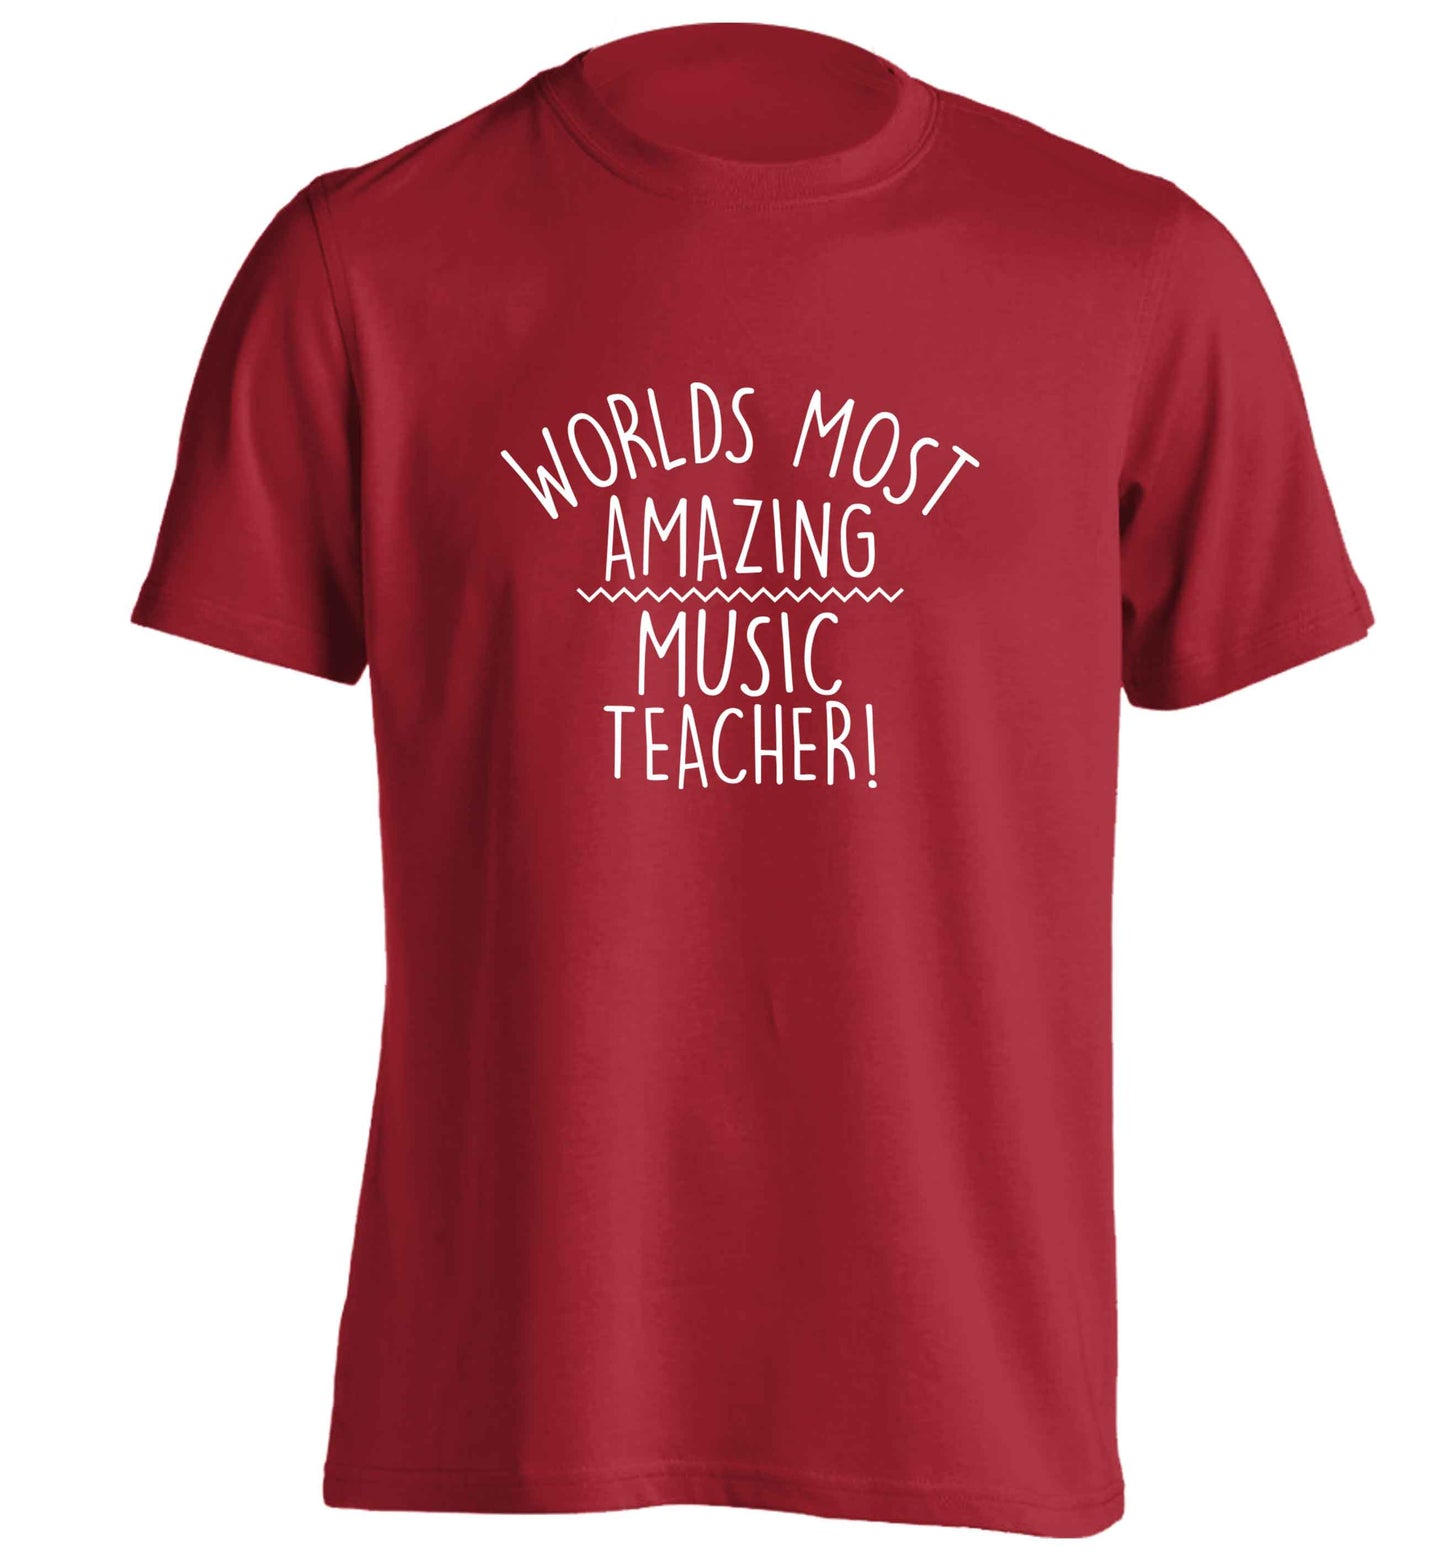 Worlds most amazing music teacher adults unisex red Tshirt 2XL